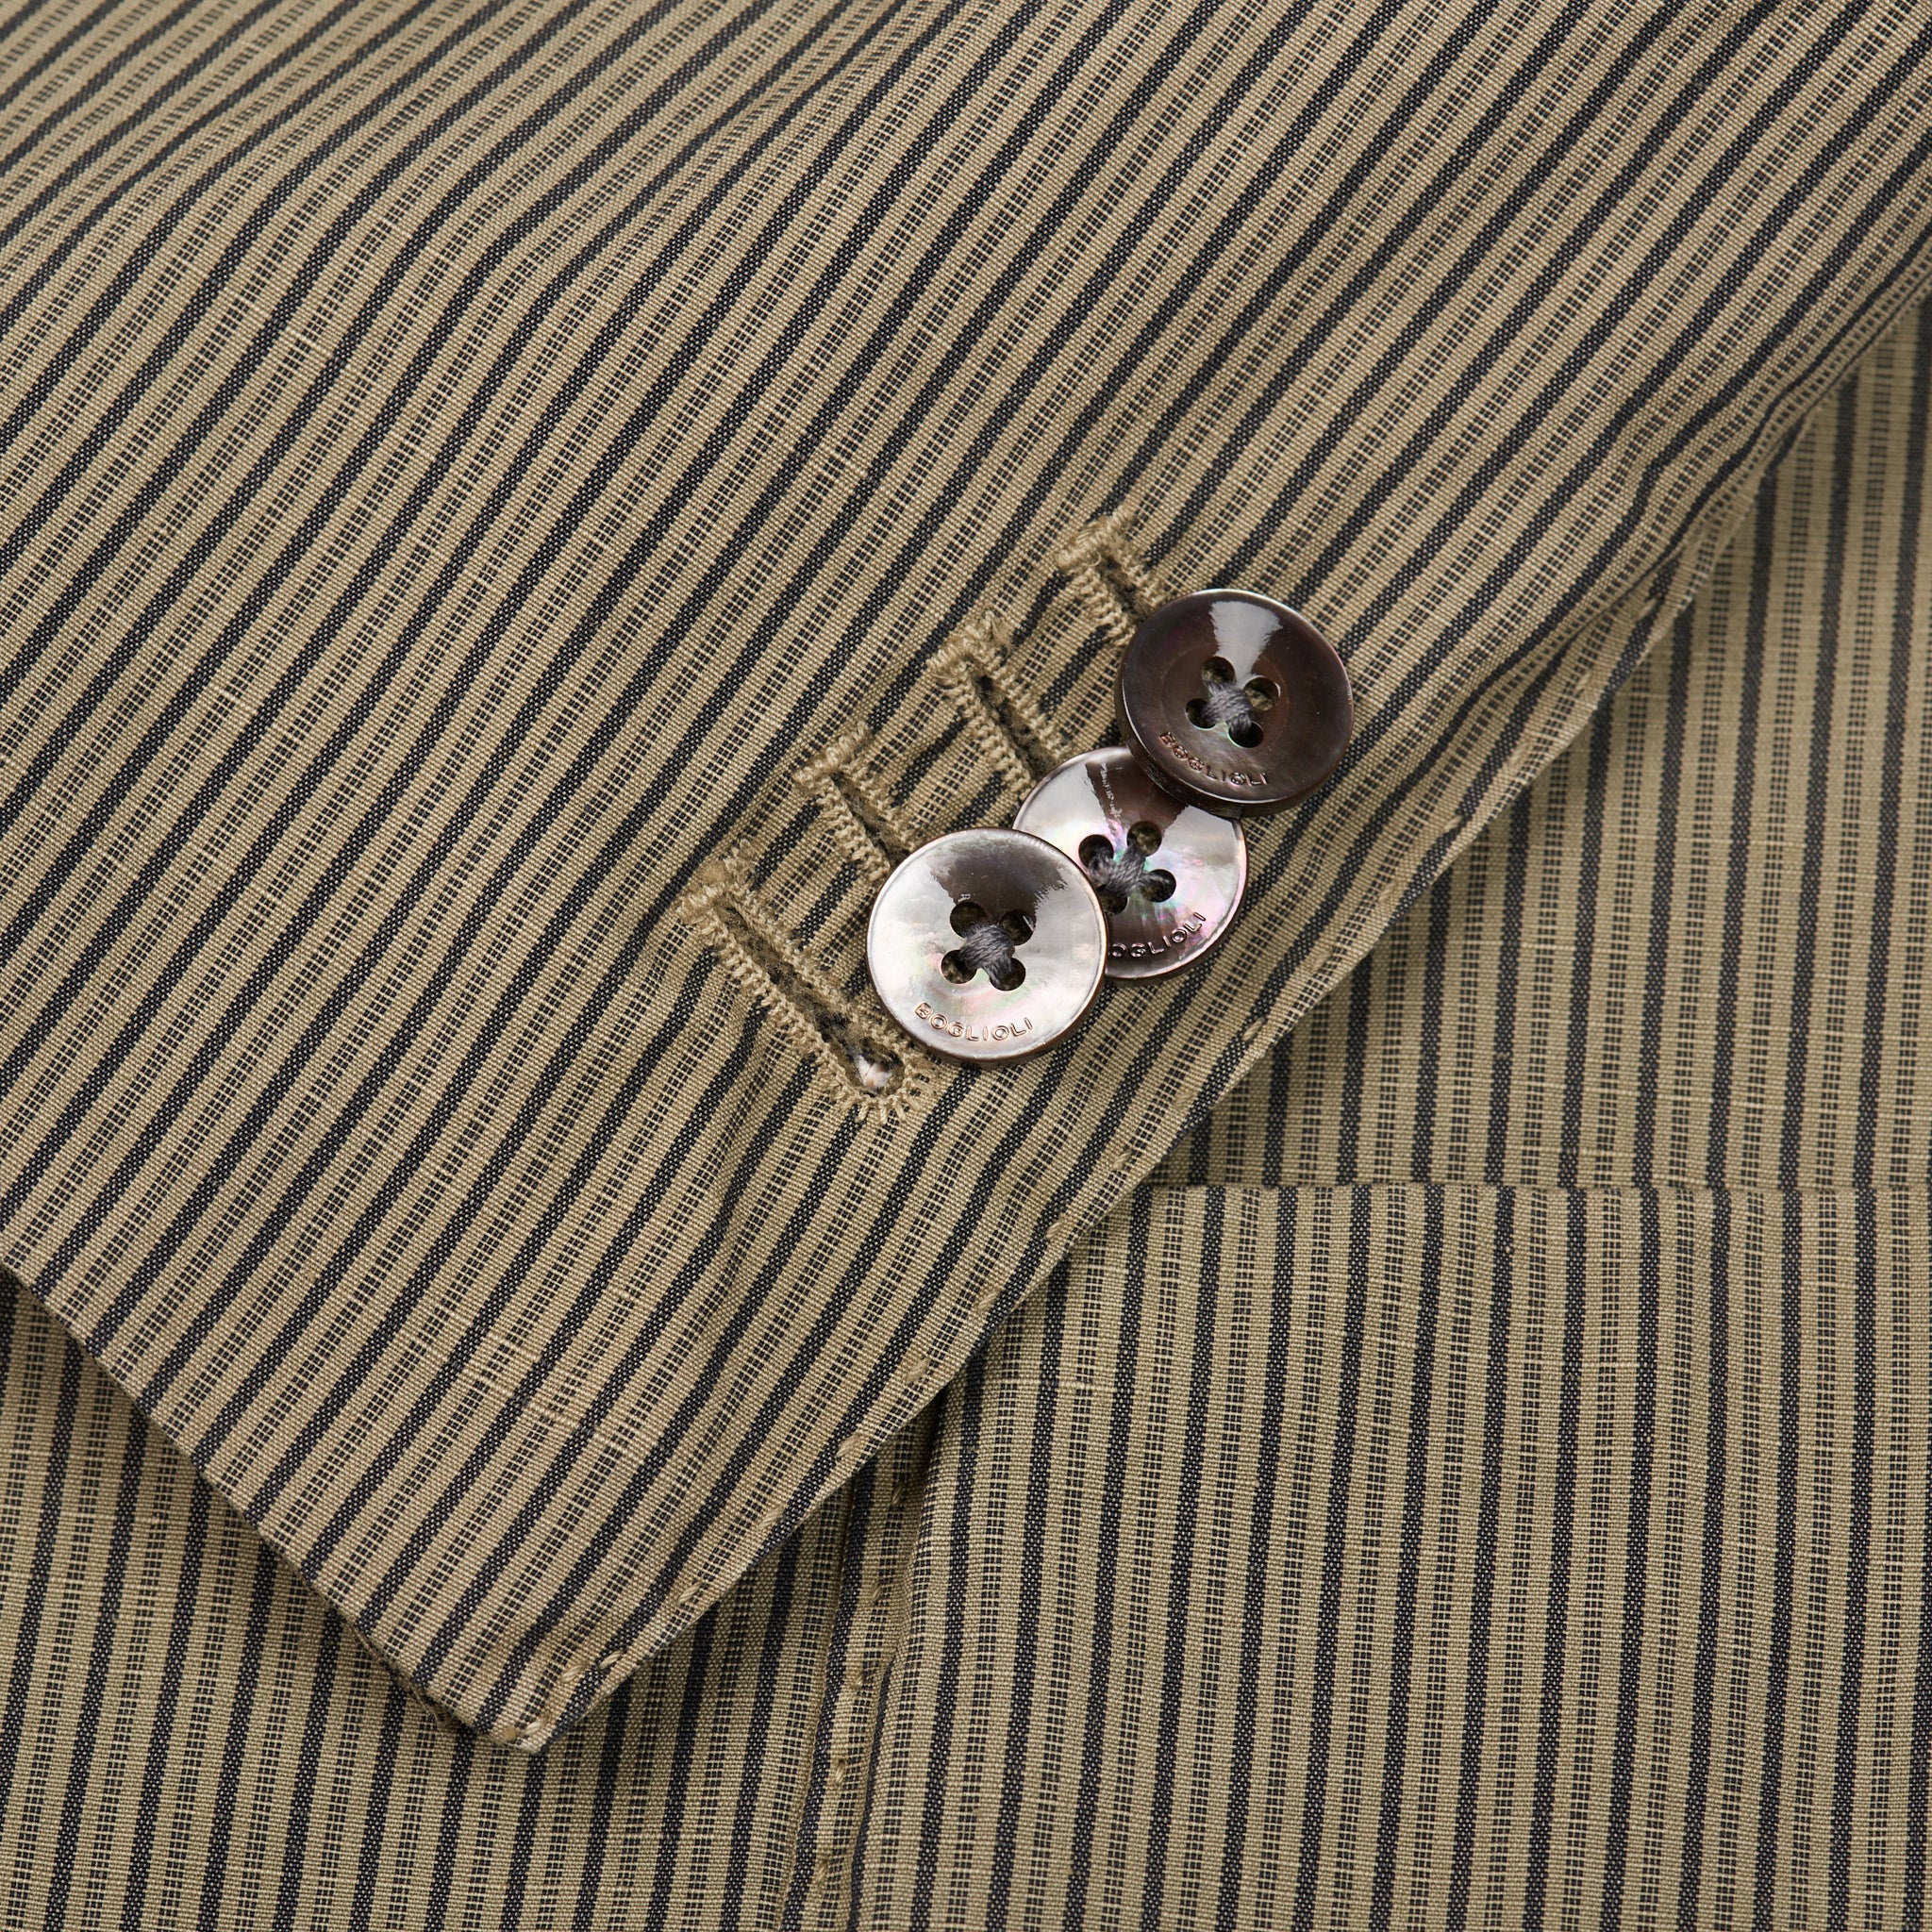 BOGLIOLI "K. Jacket" Khaki Striped Cotton-Linen-Mohair Peak lapel Jacket 48 NEW US 38 BOGLIOLI